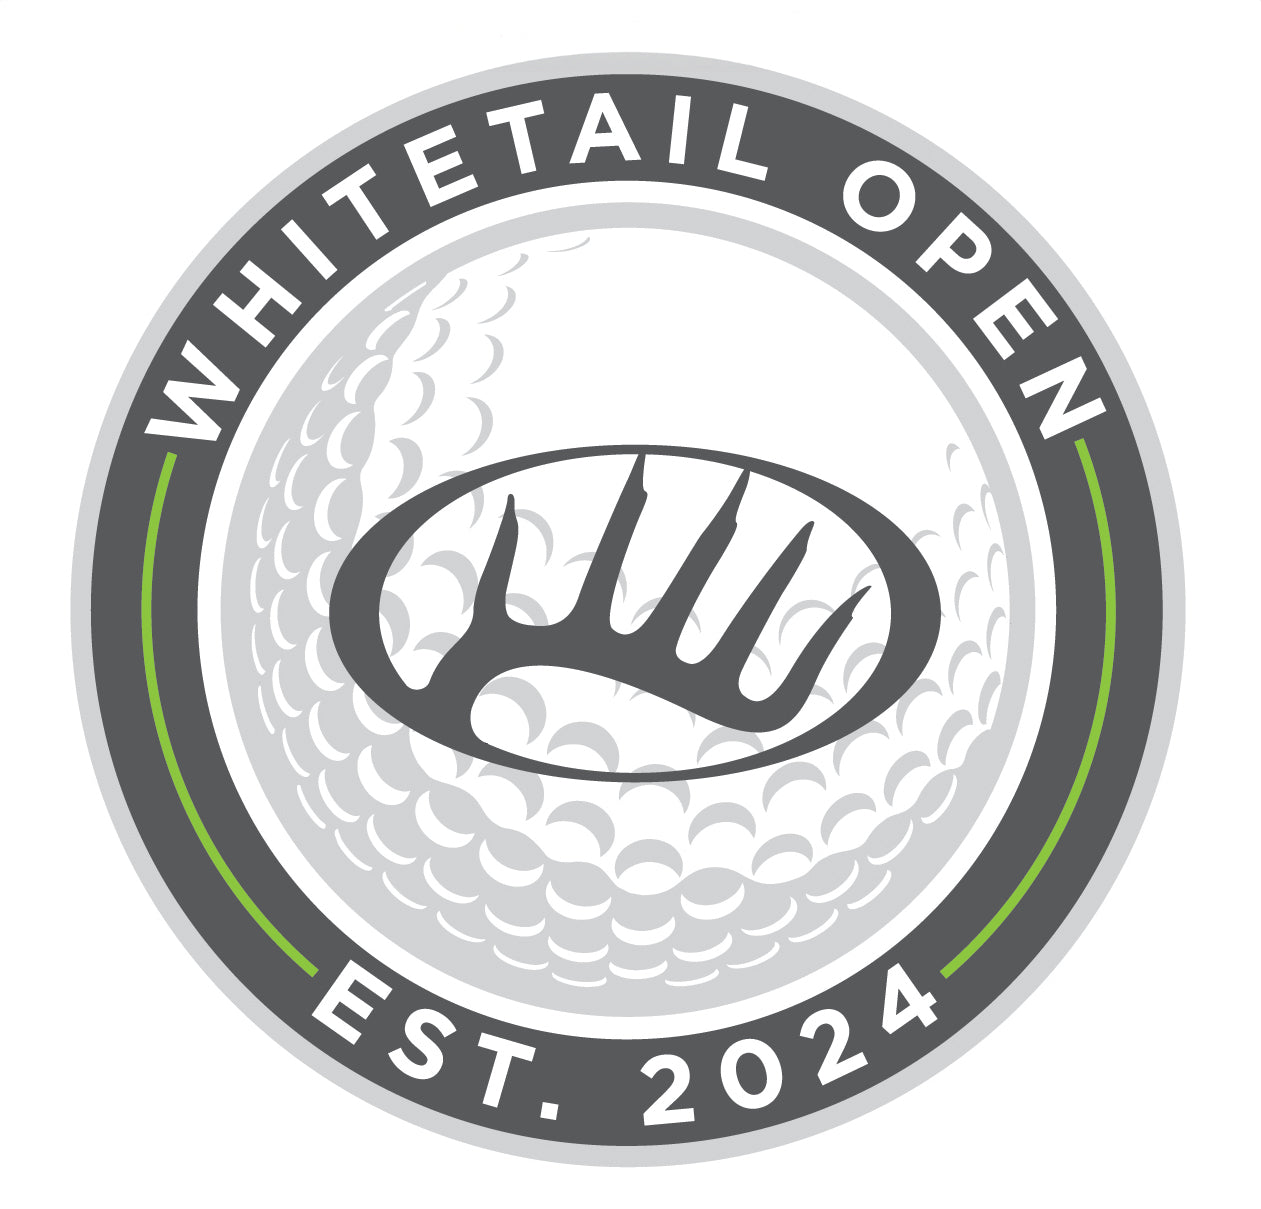 Whitetail Properties Open Registration